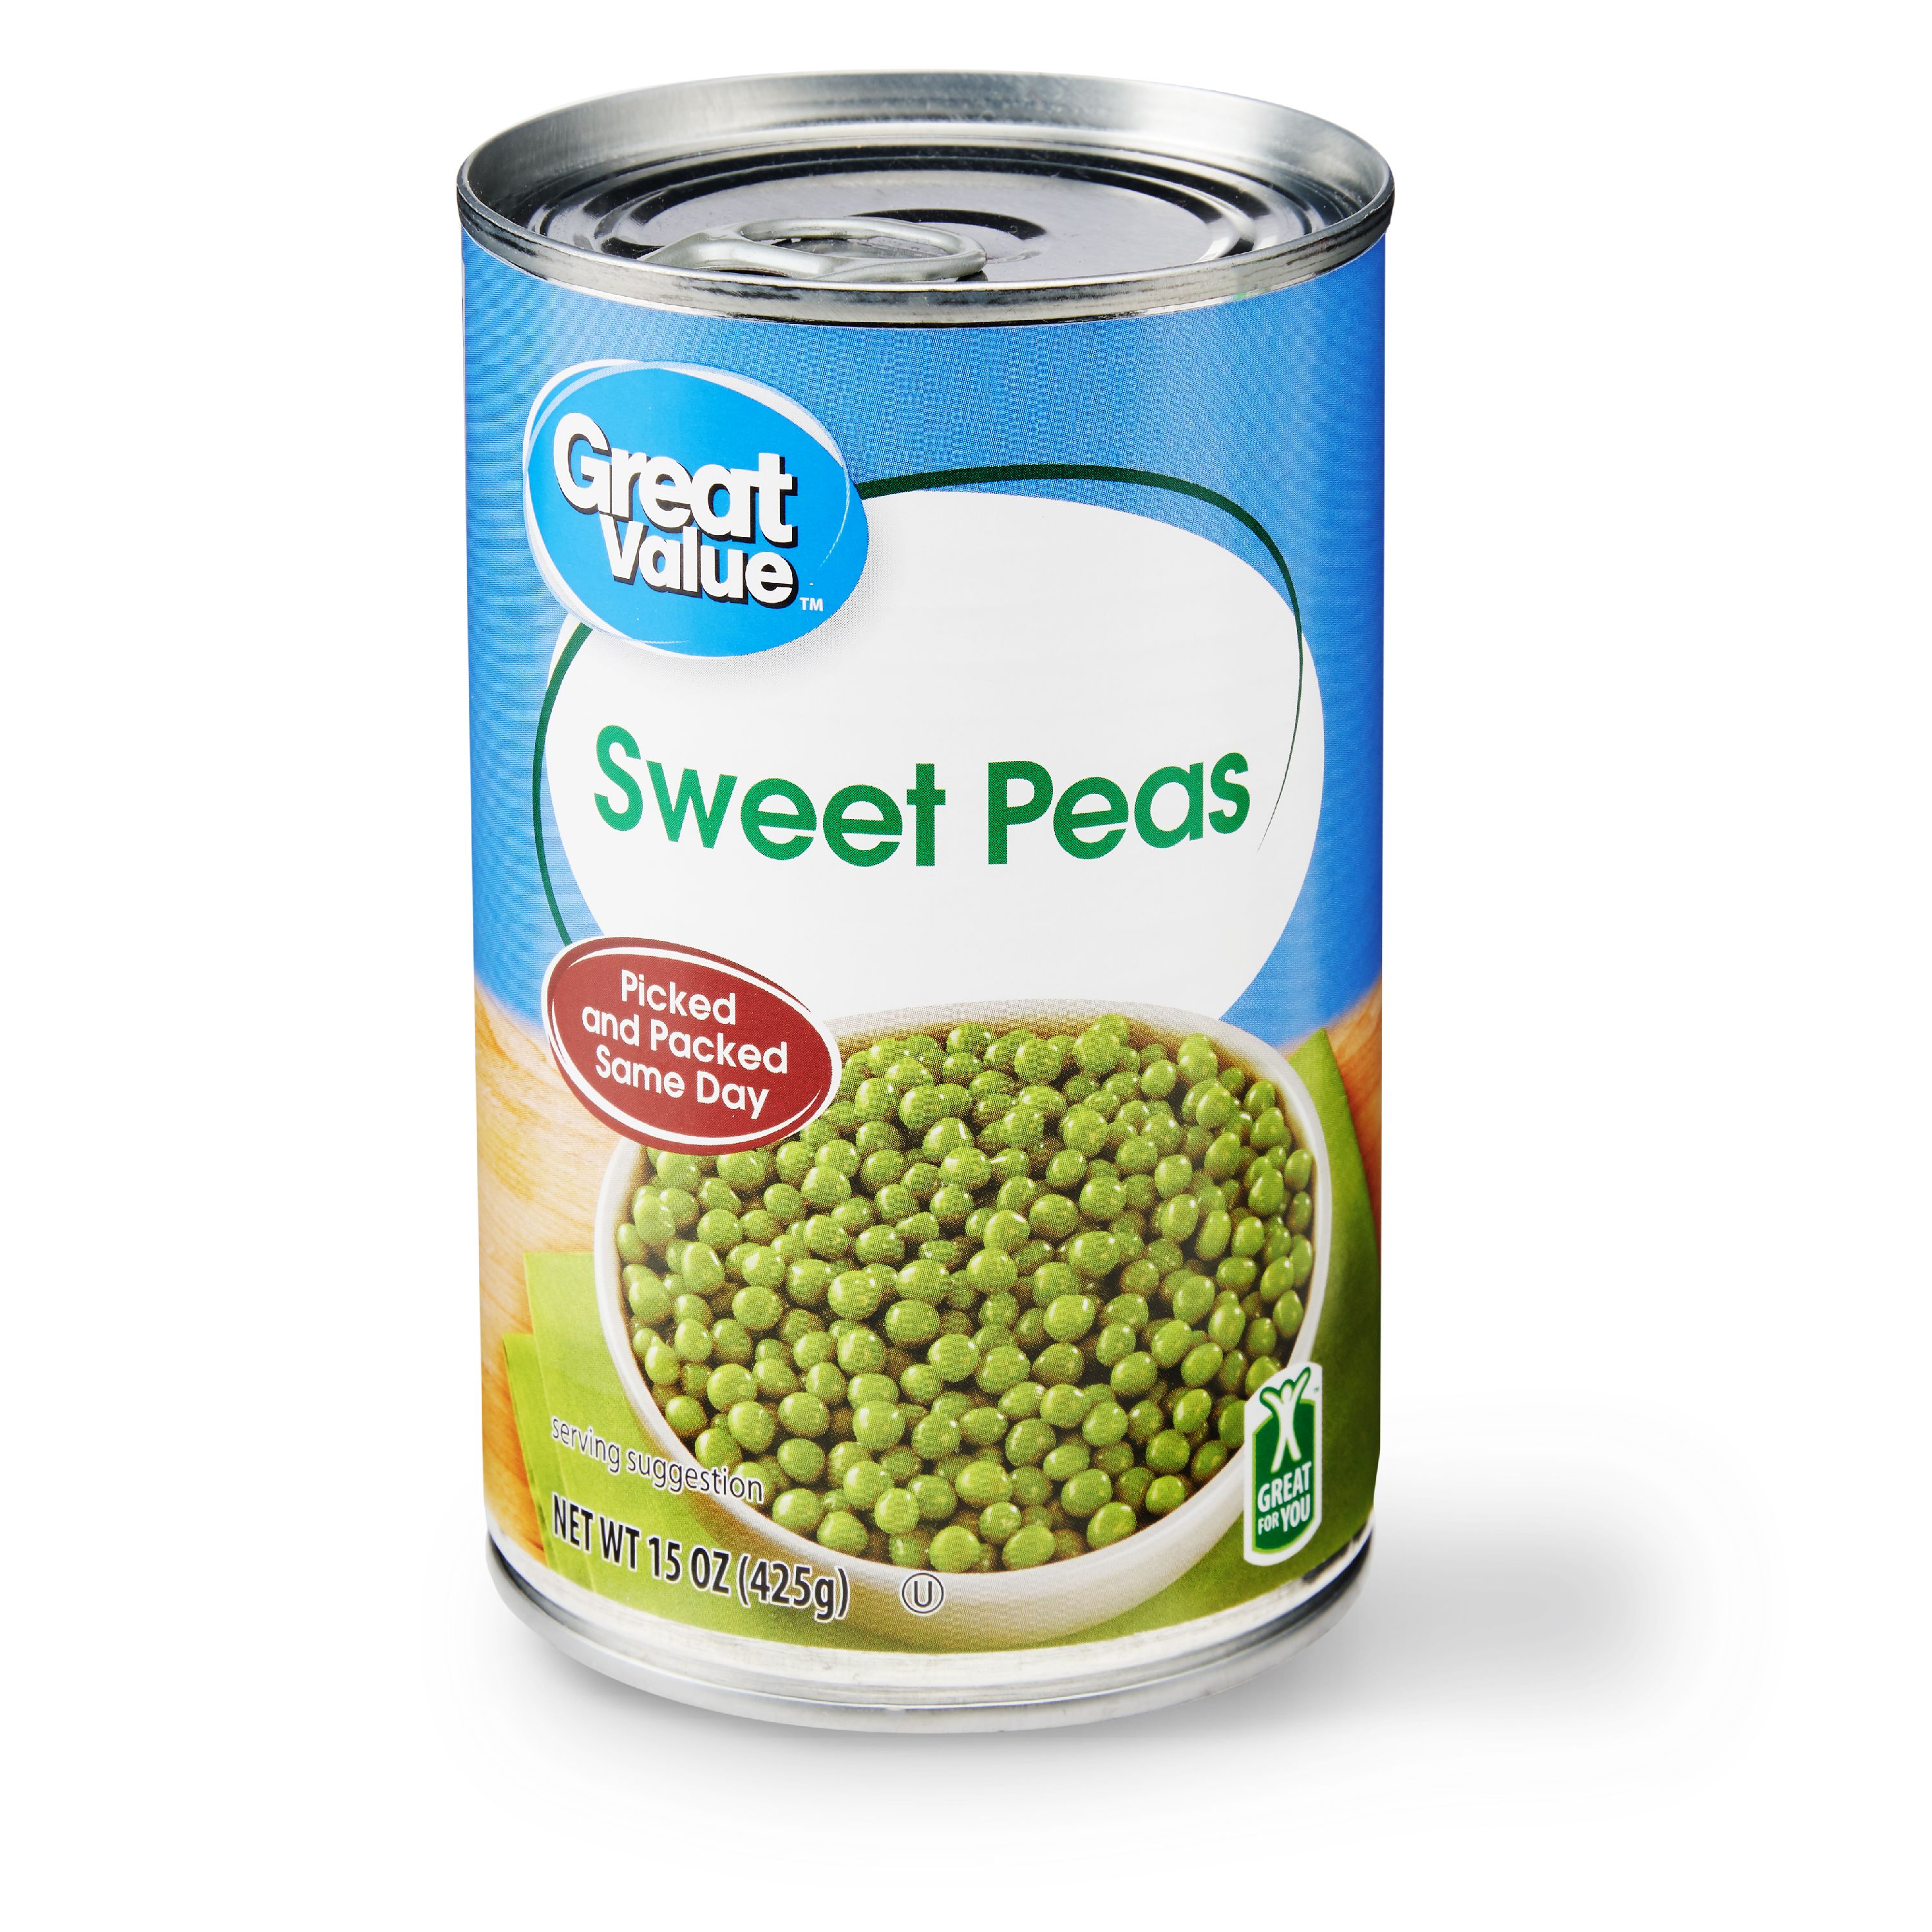 Great Value Sweet Peas, 15 Oz Image